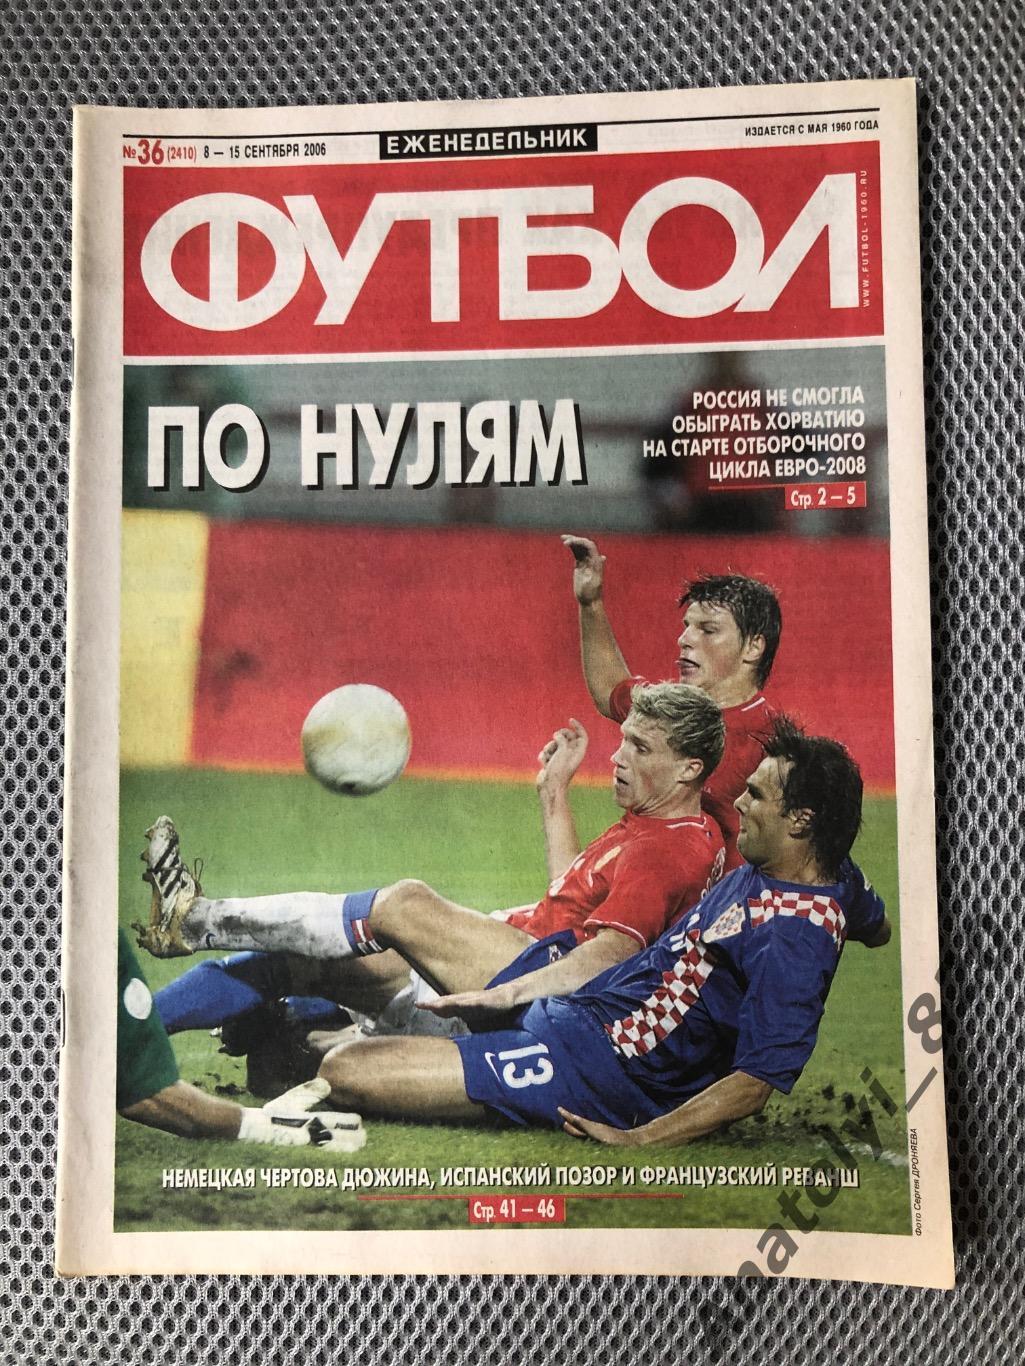 Еженедельник футбол 2006 год, номер 36